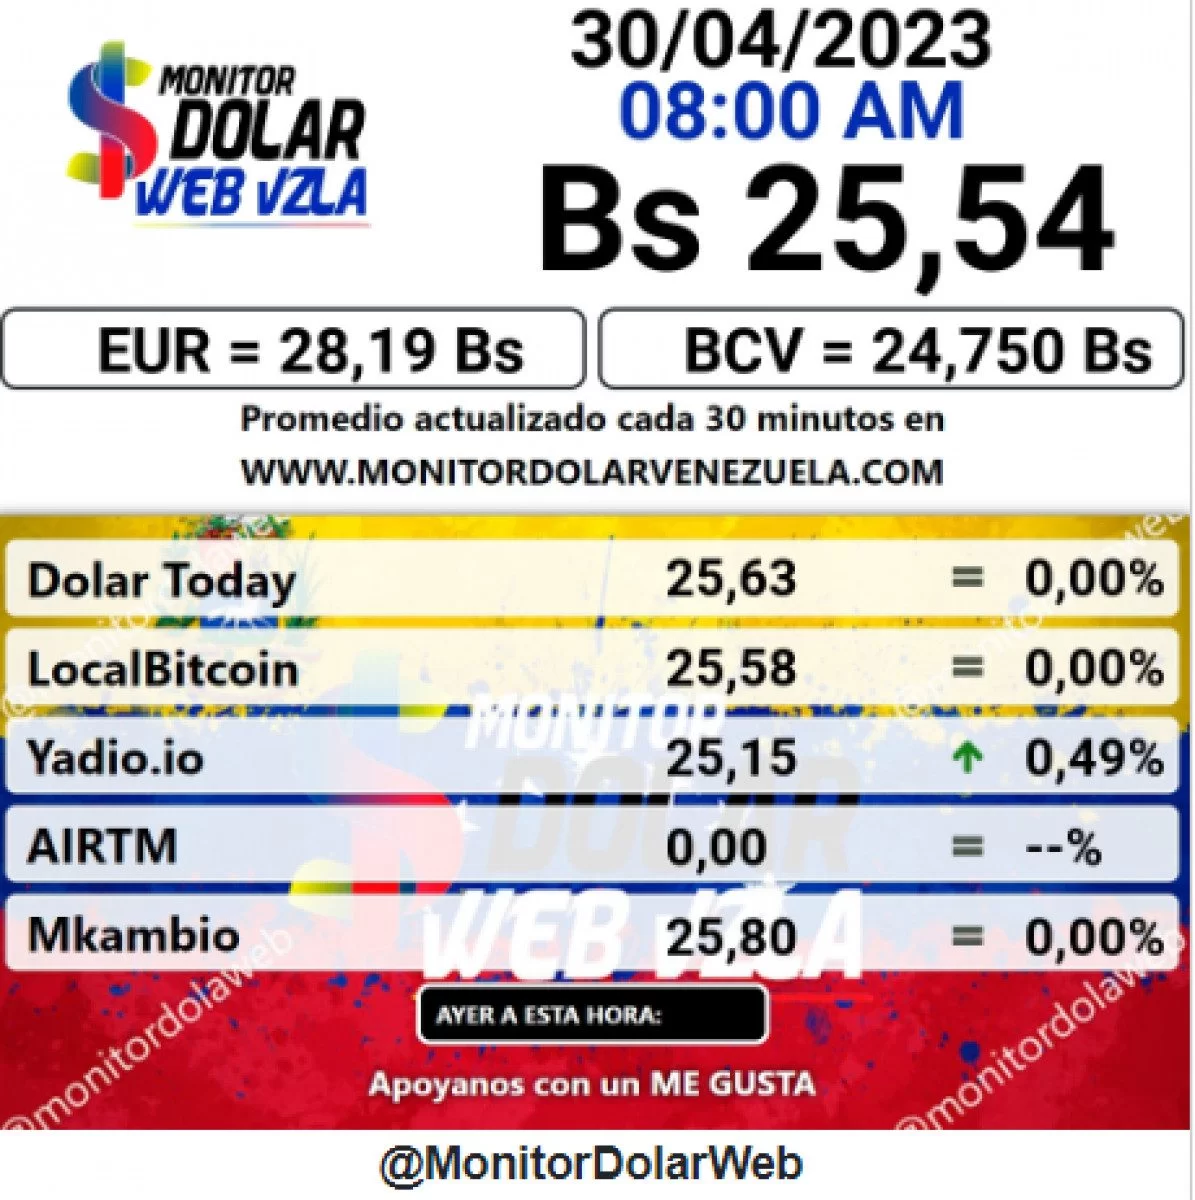 dolartoday en venezuela precio del dolar este domingo 30 de abril de 2023 laverdaddemonagas.com lg 644e5a77a77fd47ee7595b0e